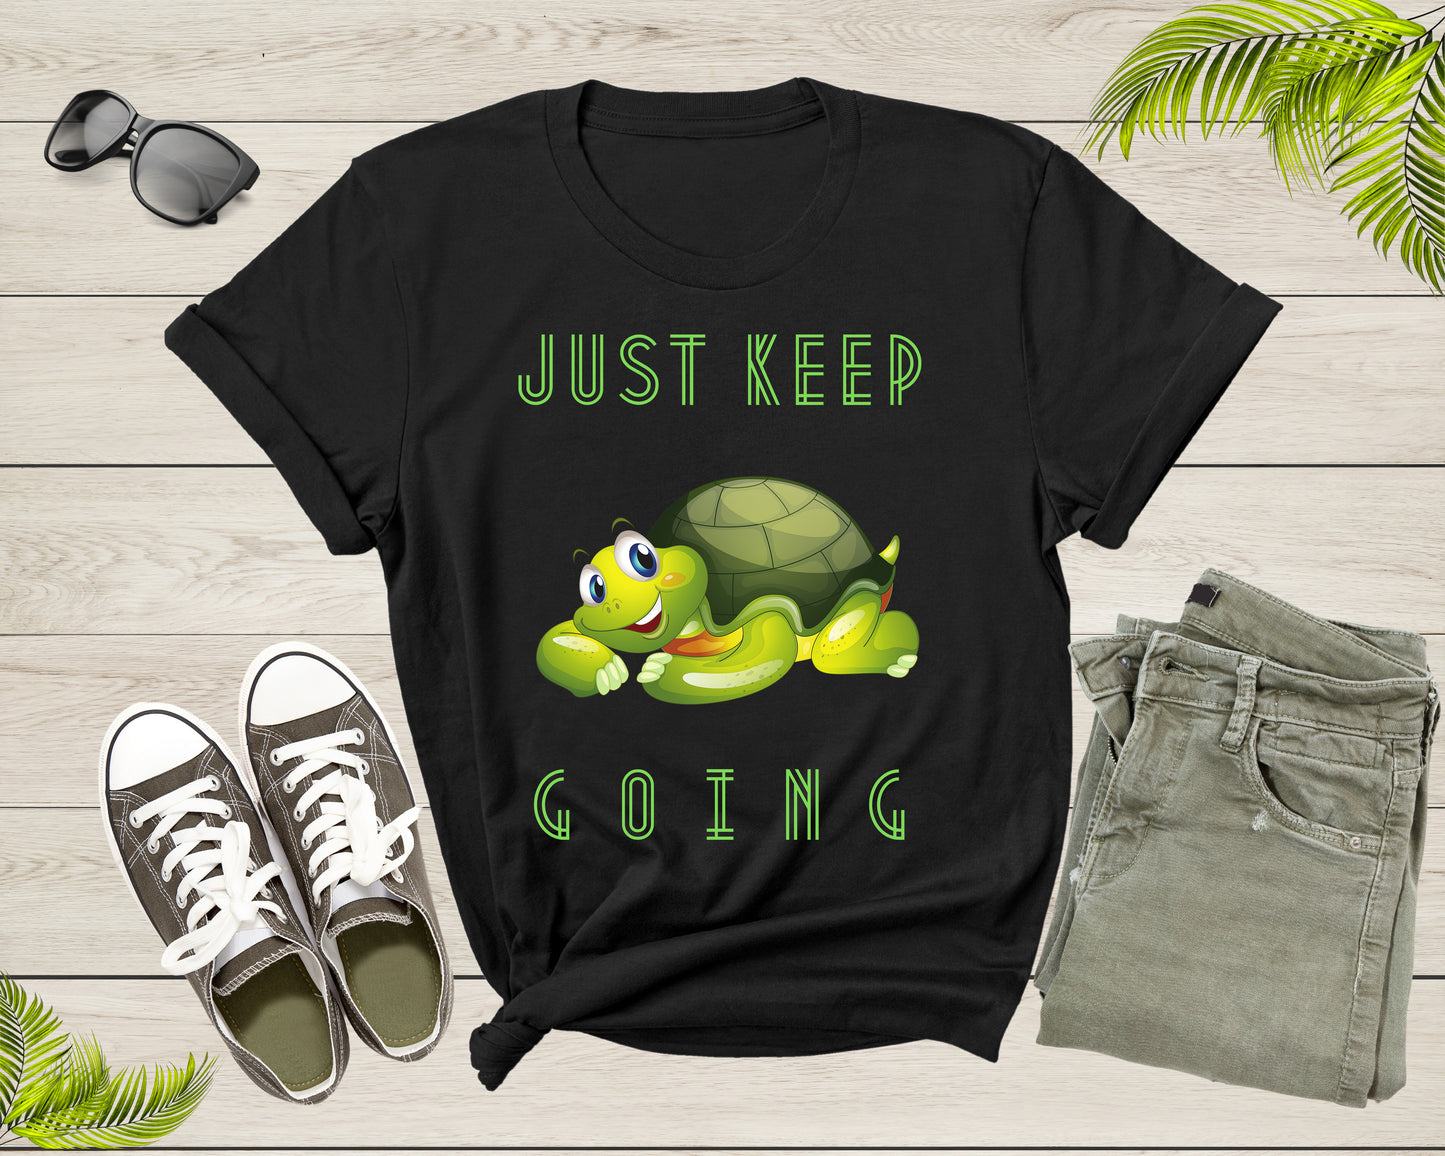 Just Keep Going Cute Turtle Tortoise Motivational Inspire T-Shirt Tortoise Quote Lover Gift T Shirt for Men Women Kids Boys Girls Tshirt